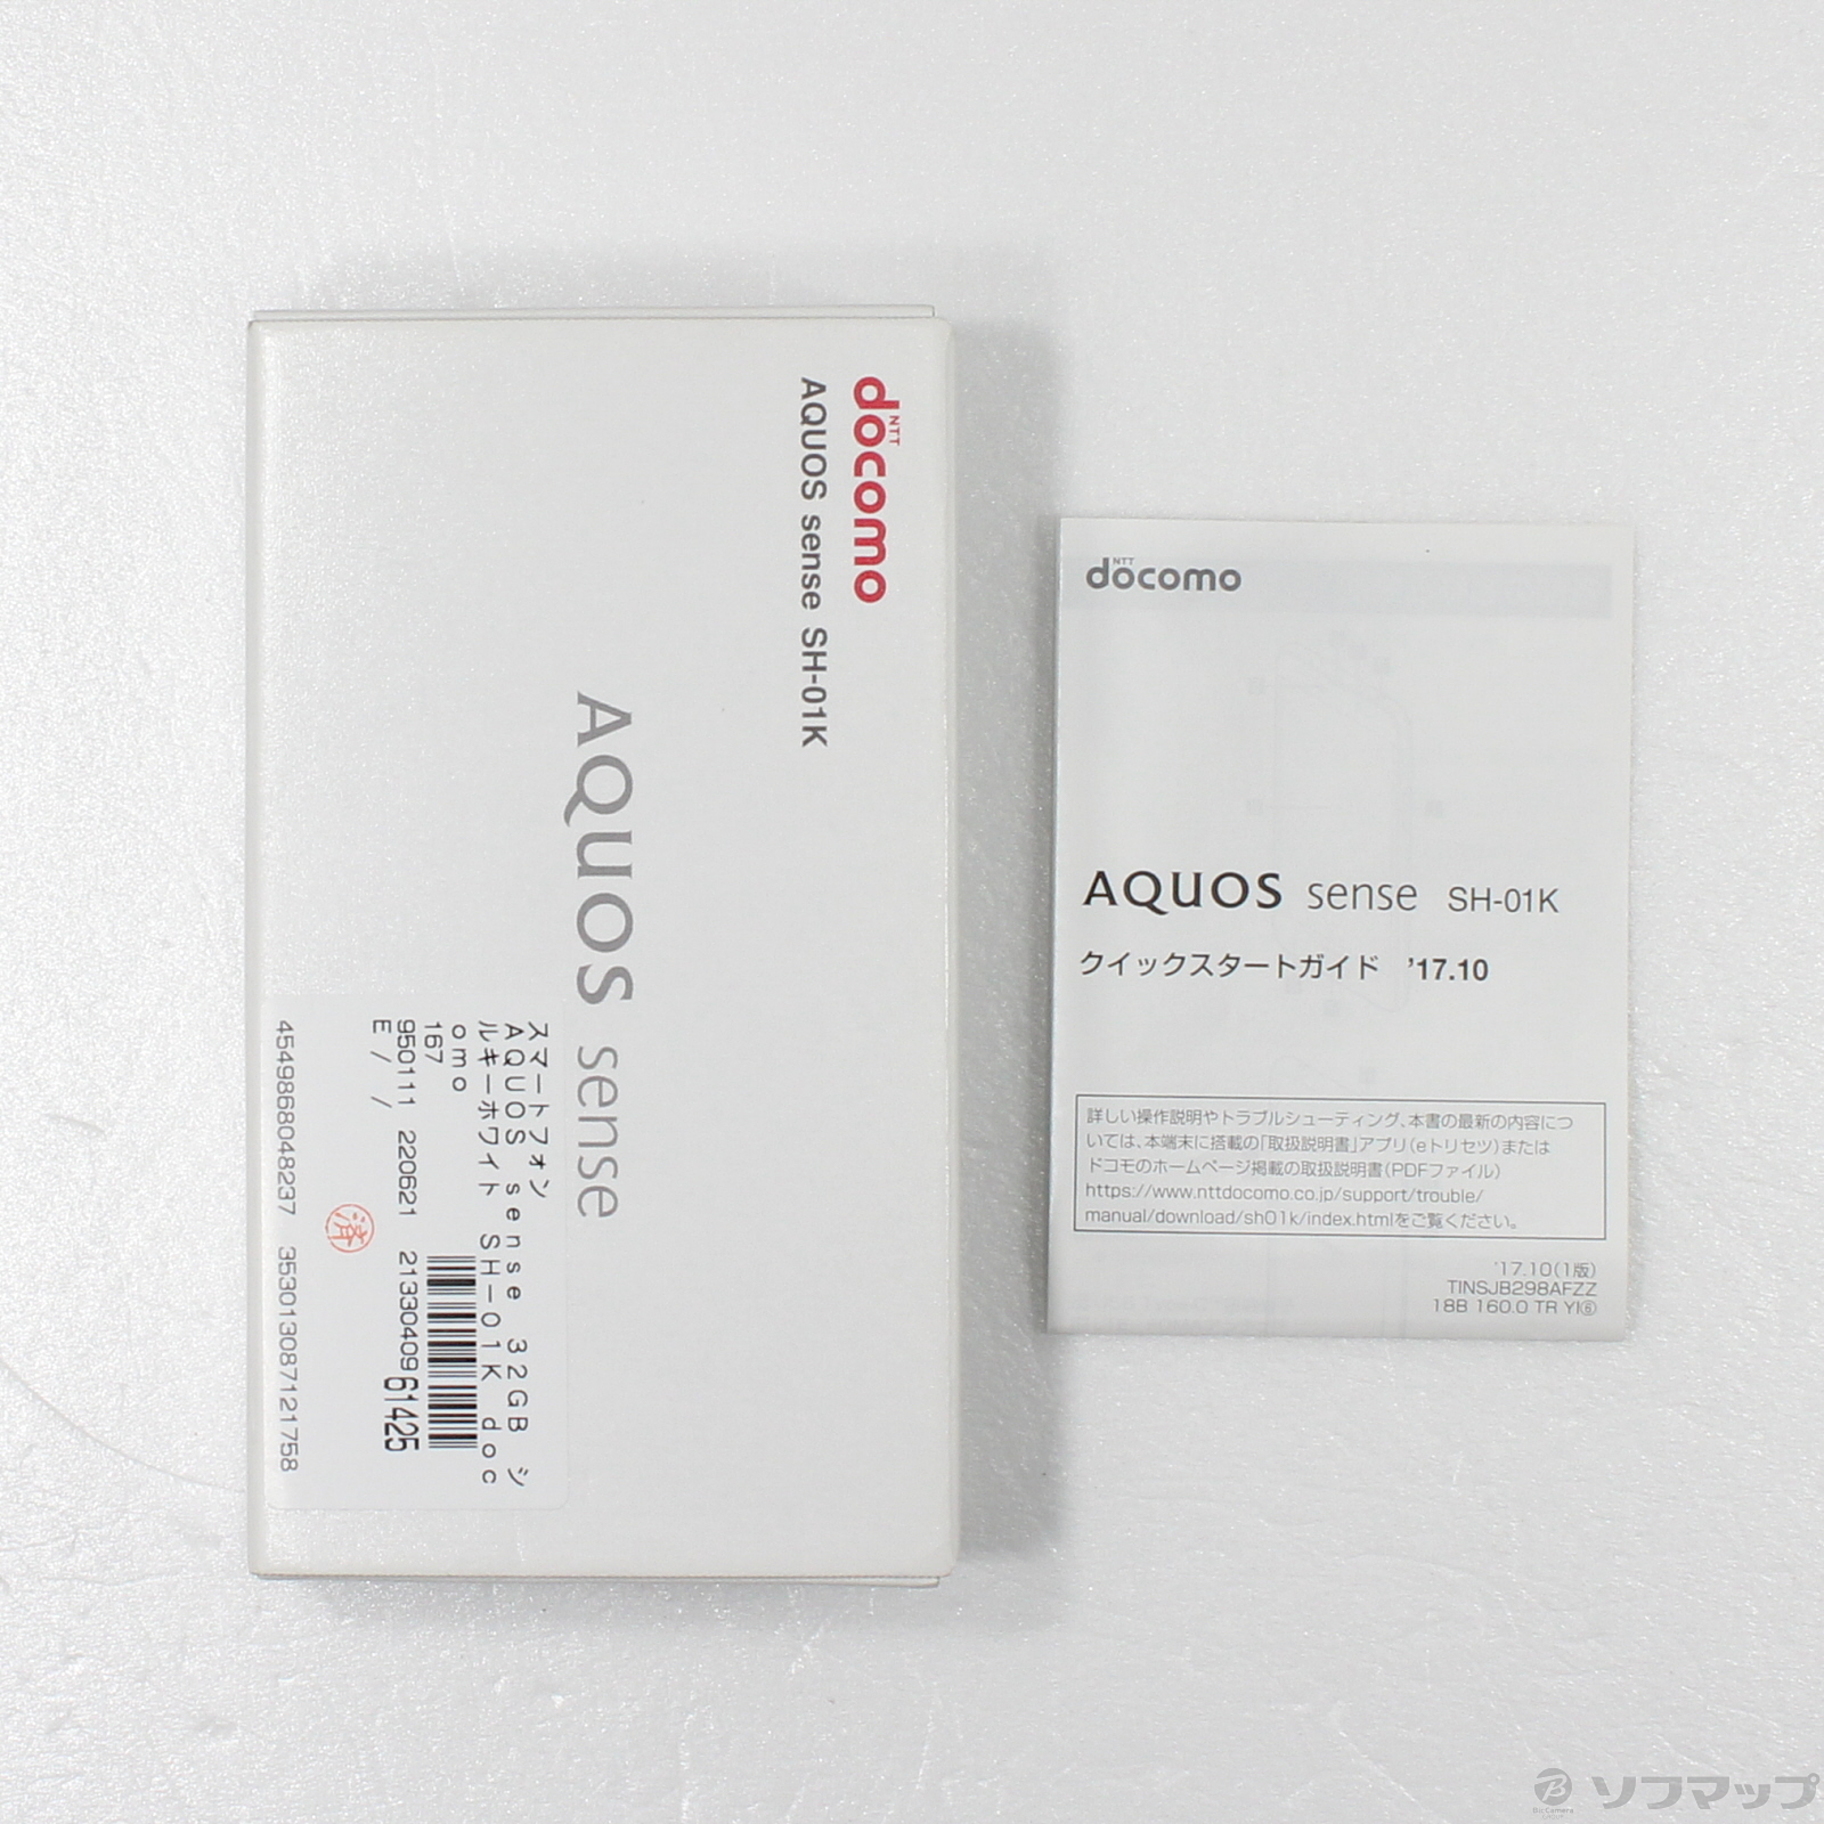 AQUOS sense 32GB シルキーホワイト SH-01K docomoロック解除SIMフリー